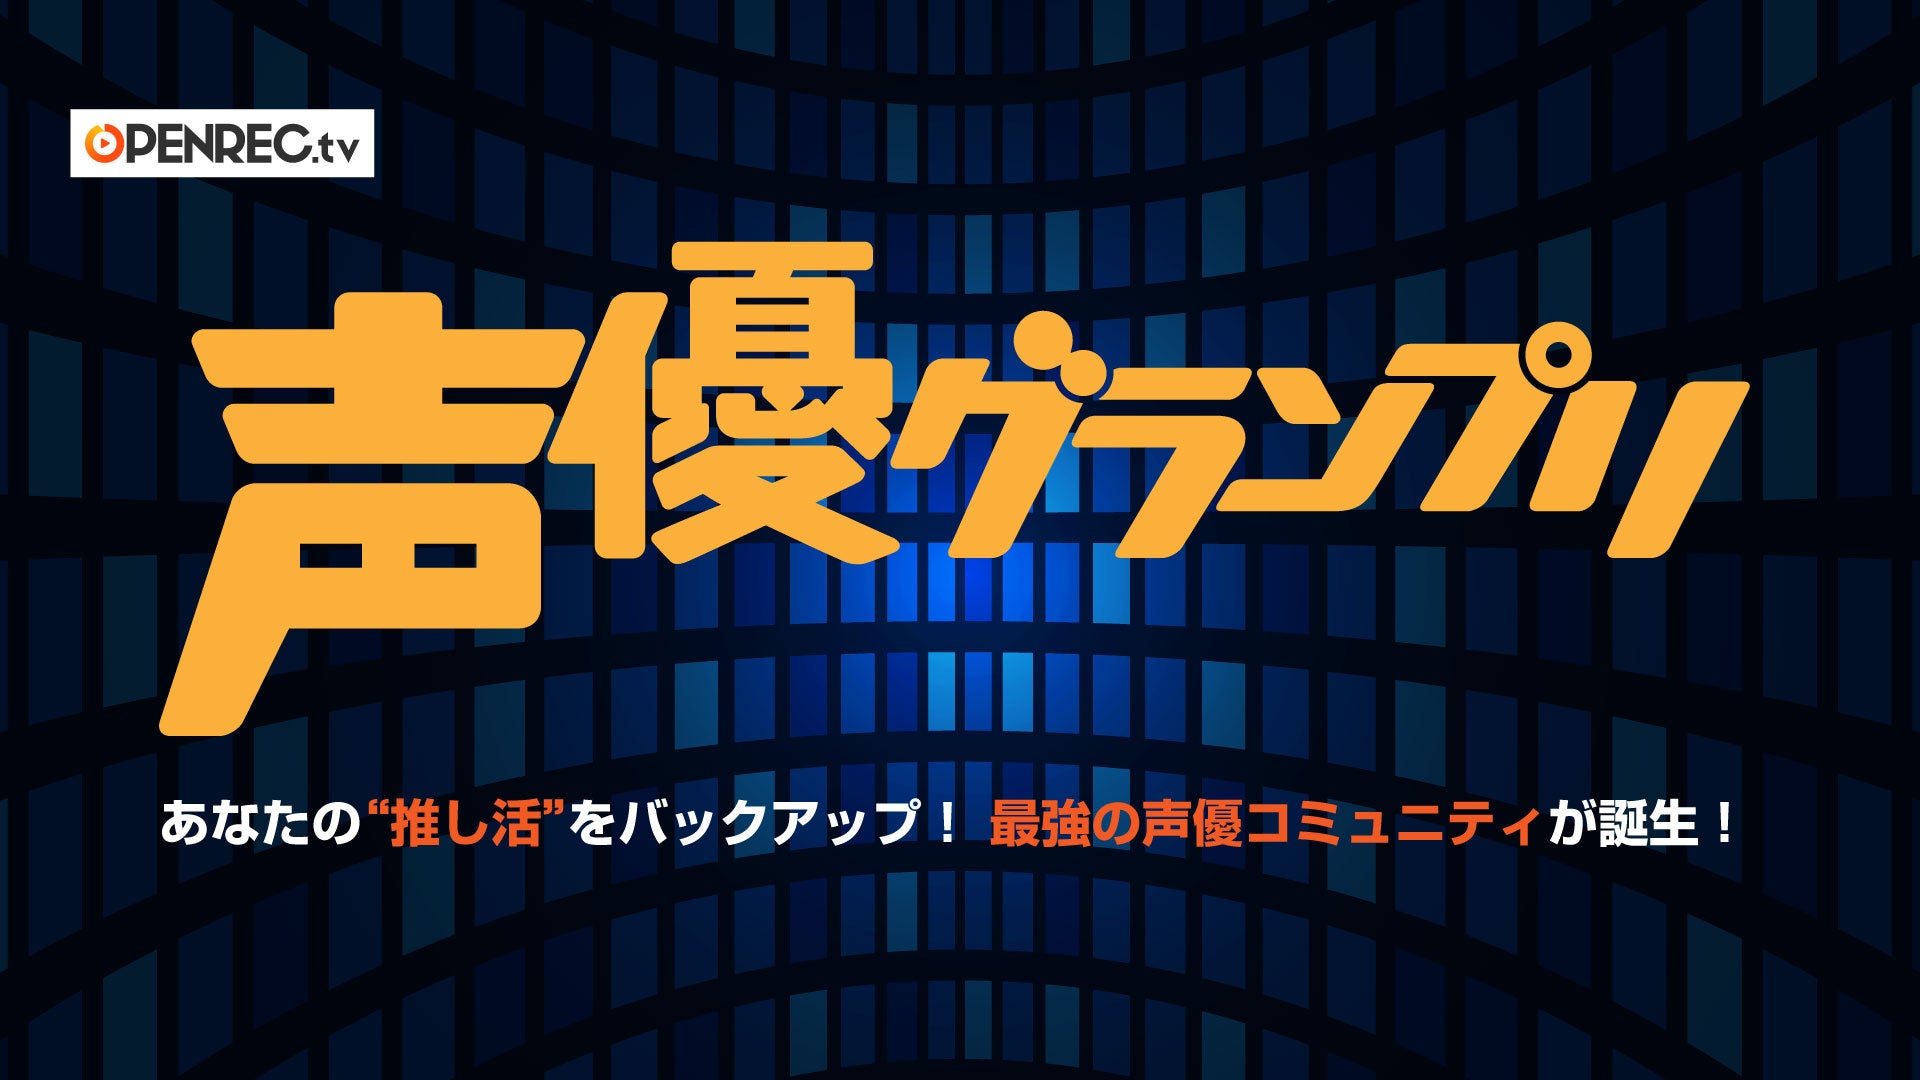 TVアニメ『呪術廻戦』より、ちょこっとサイズがかわいいオリジナルデフォルメデザイン「ちょこりんマスコット」第2弾が登場。